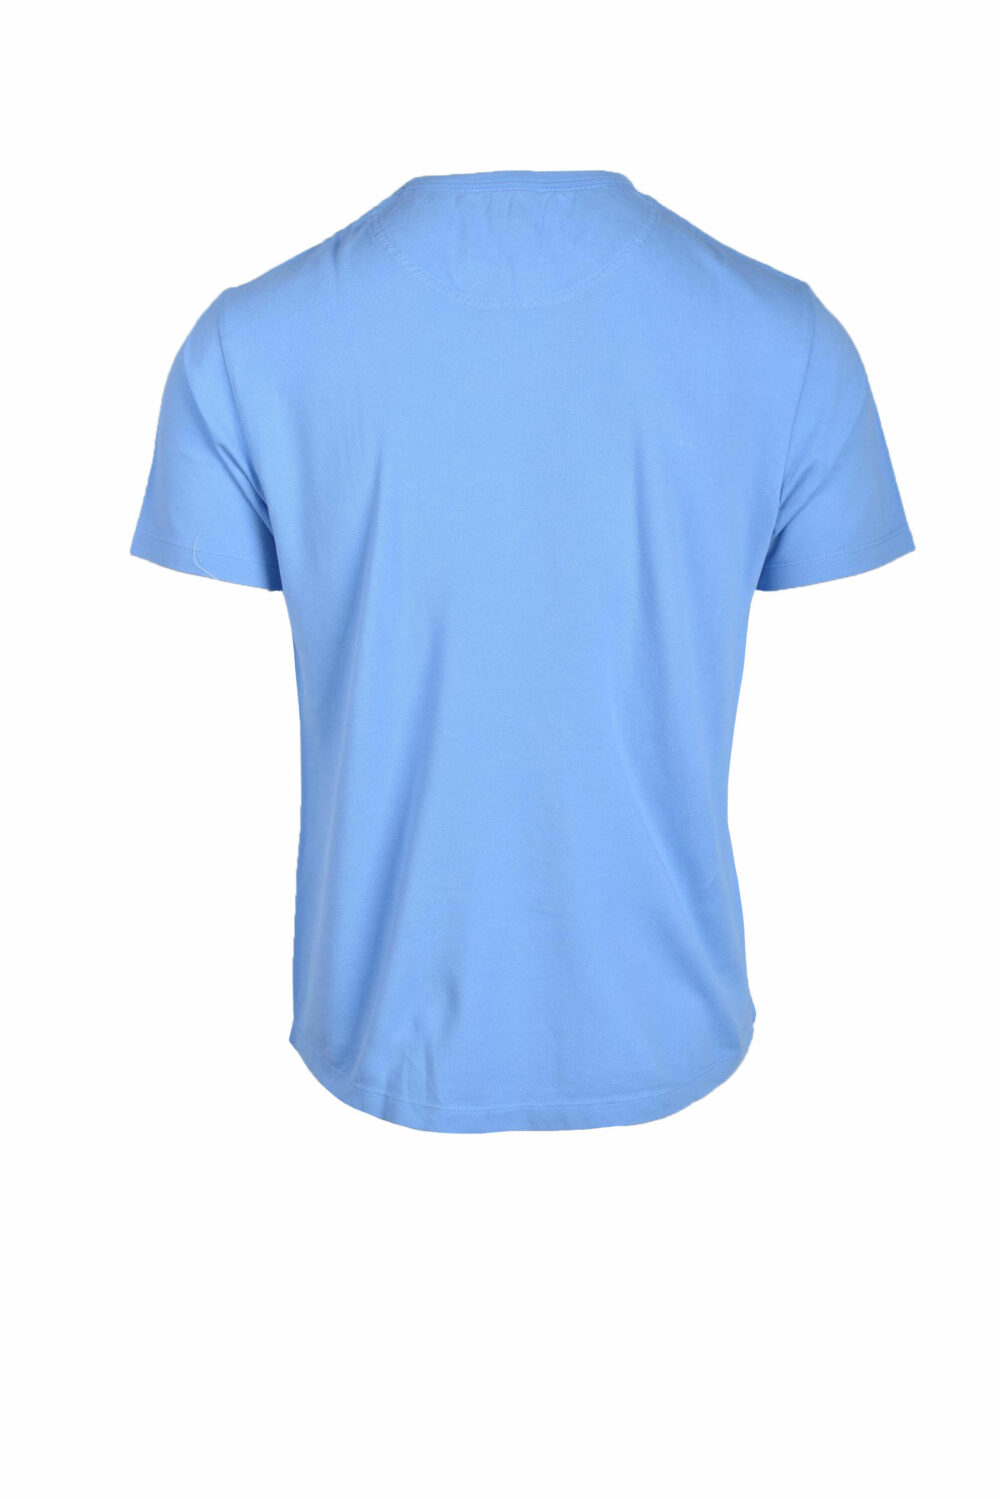 T-shirt SUN68 Azzurro - Foto 2